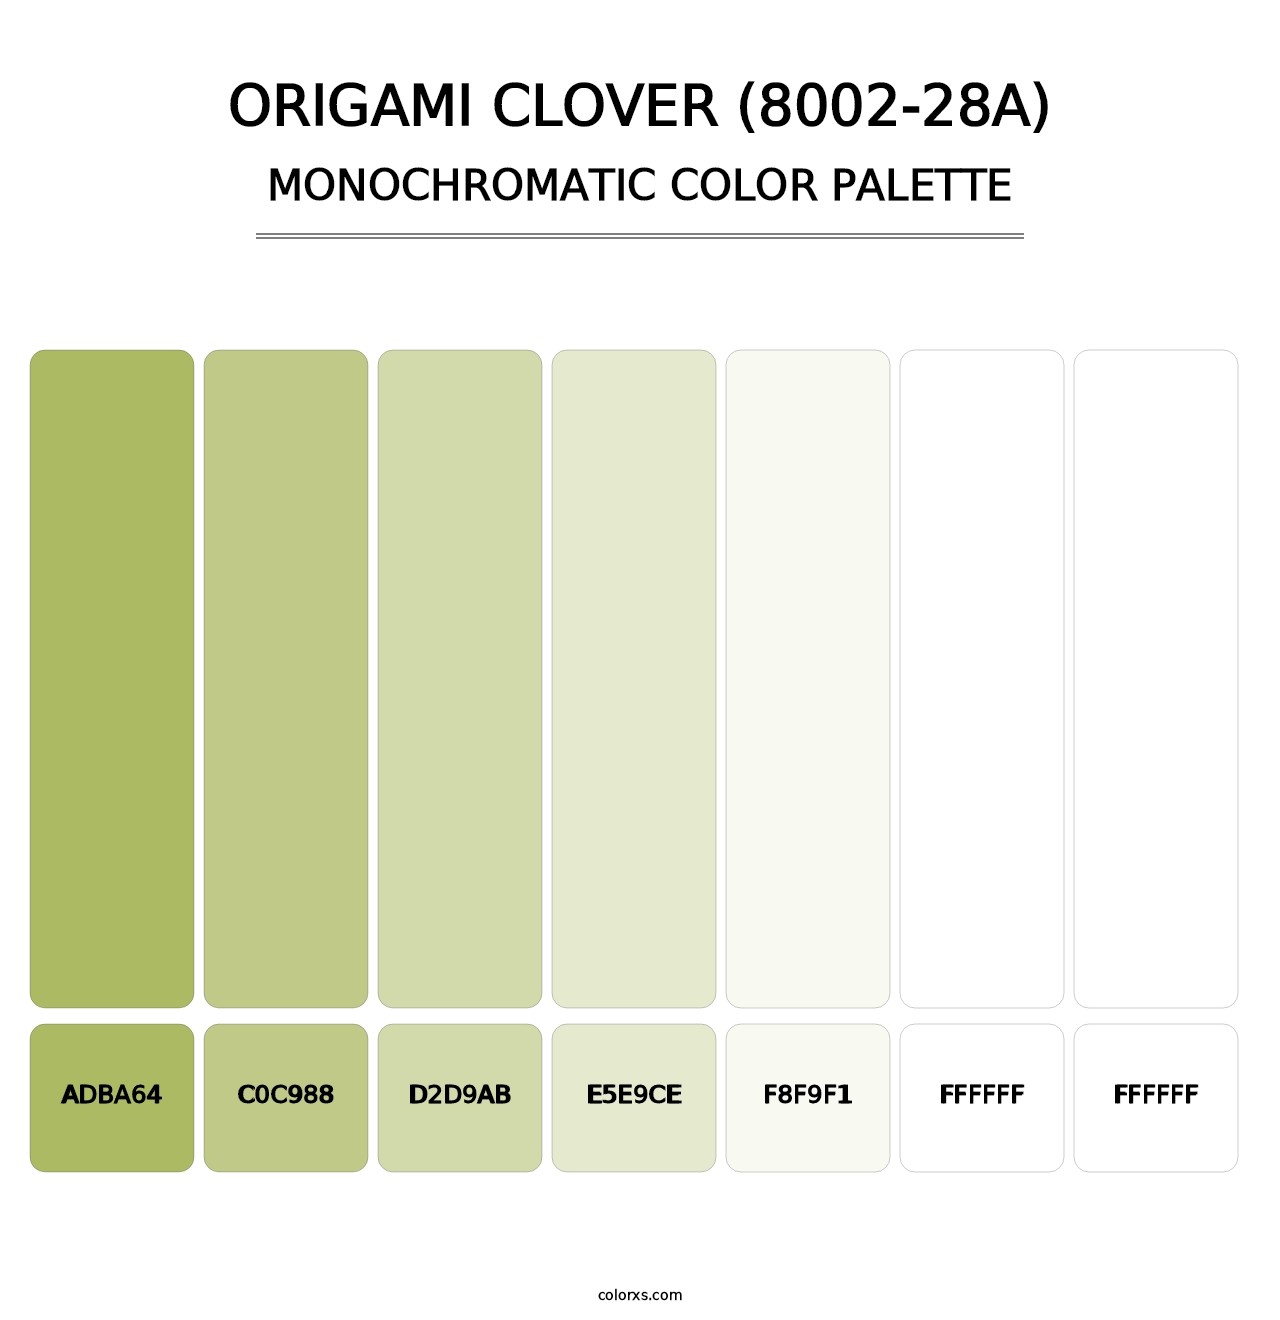 Origami Clover (8002-28A) - Monochromatic Color Palette